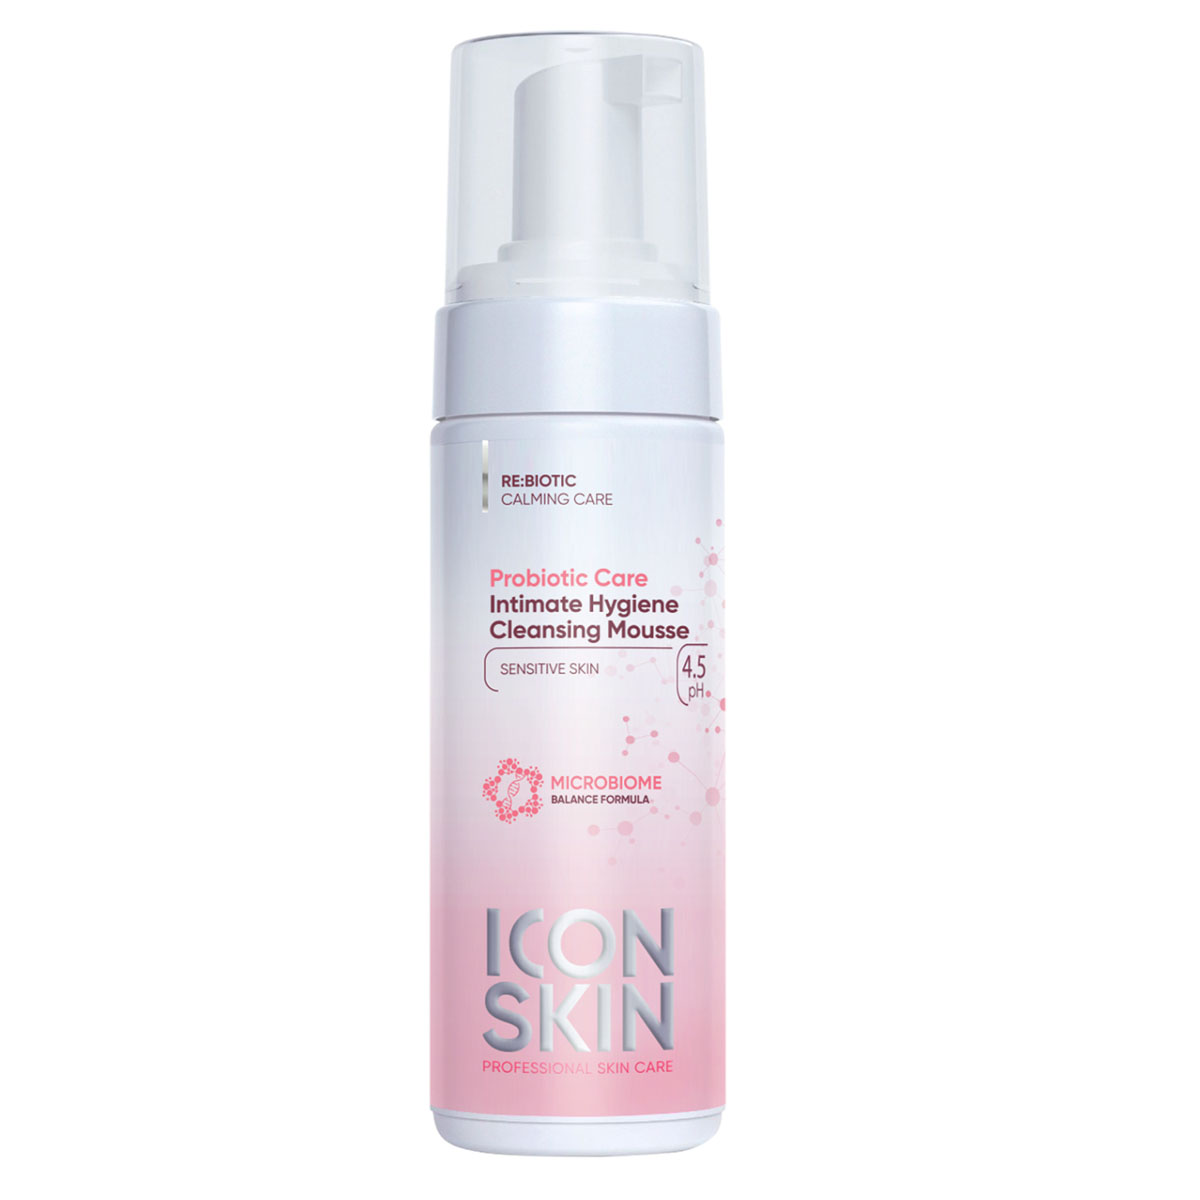 Icon Skin Мусс для интимной гигиены Probiotic Care, 175 мл (Icon Skin, Re:Biom)